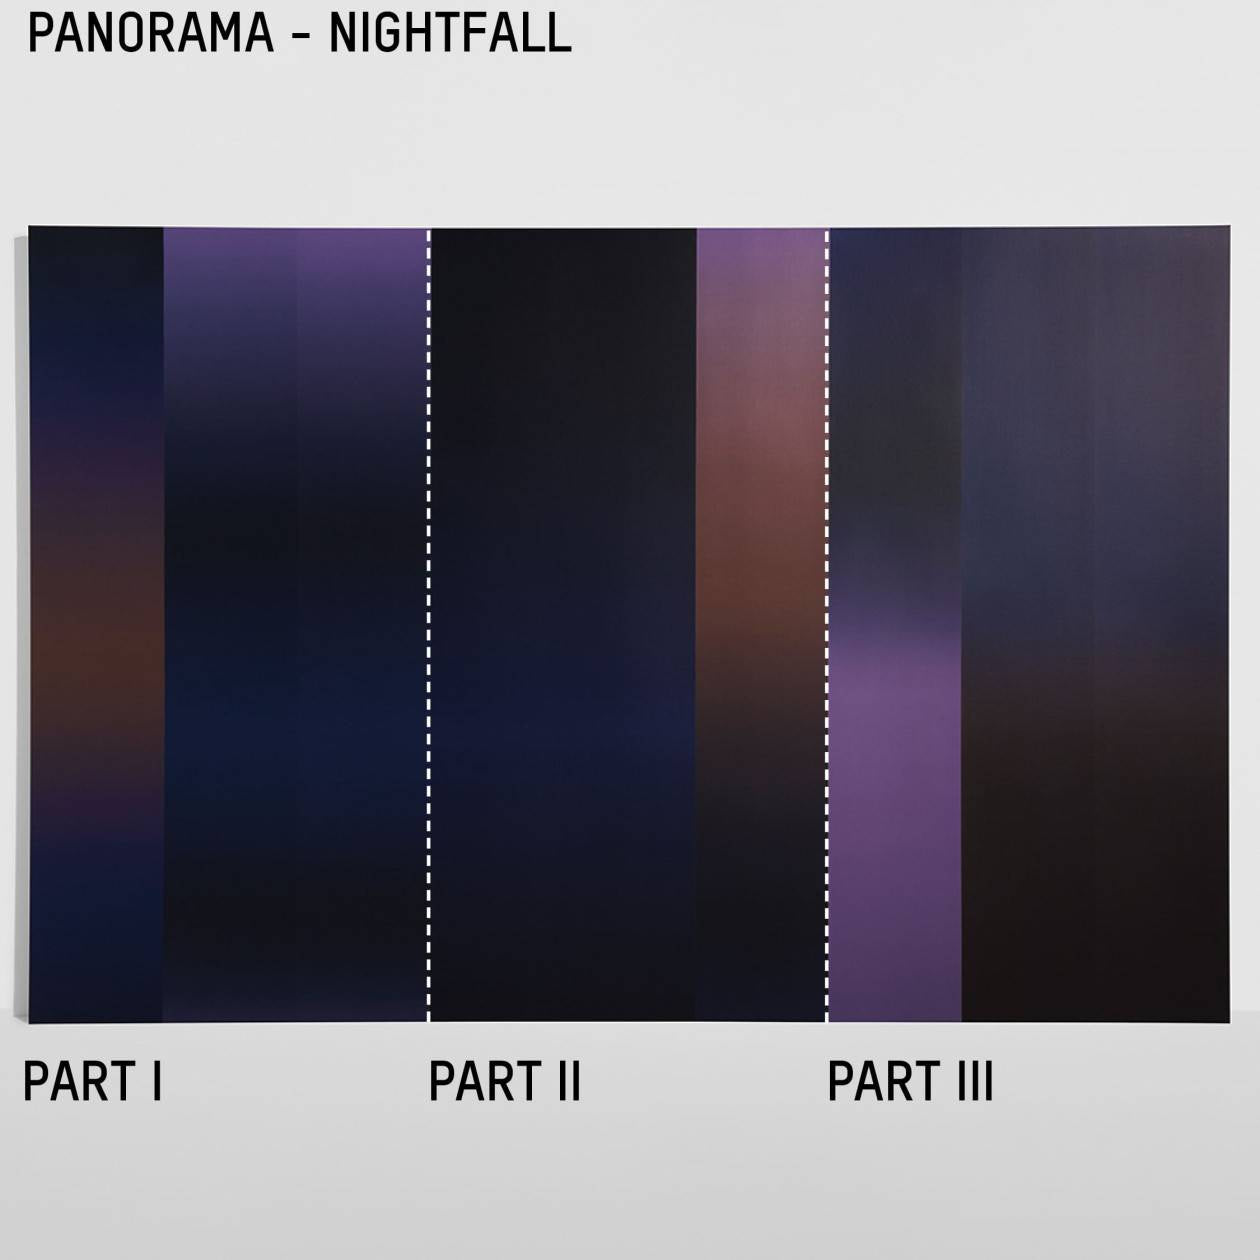 Petite Friture Panorama Carole Baijings - Nightfall